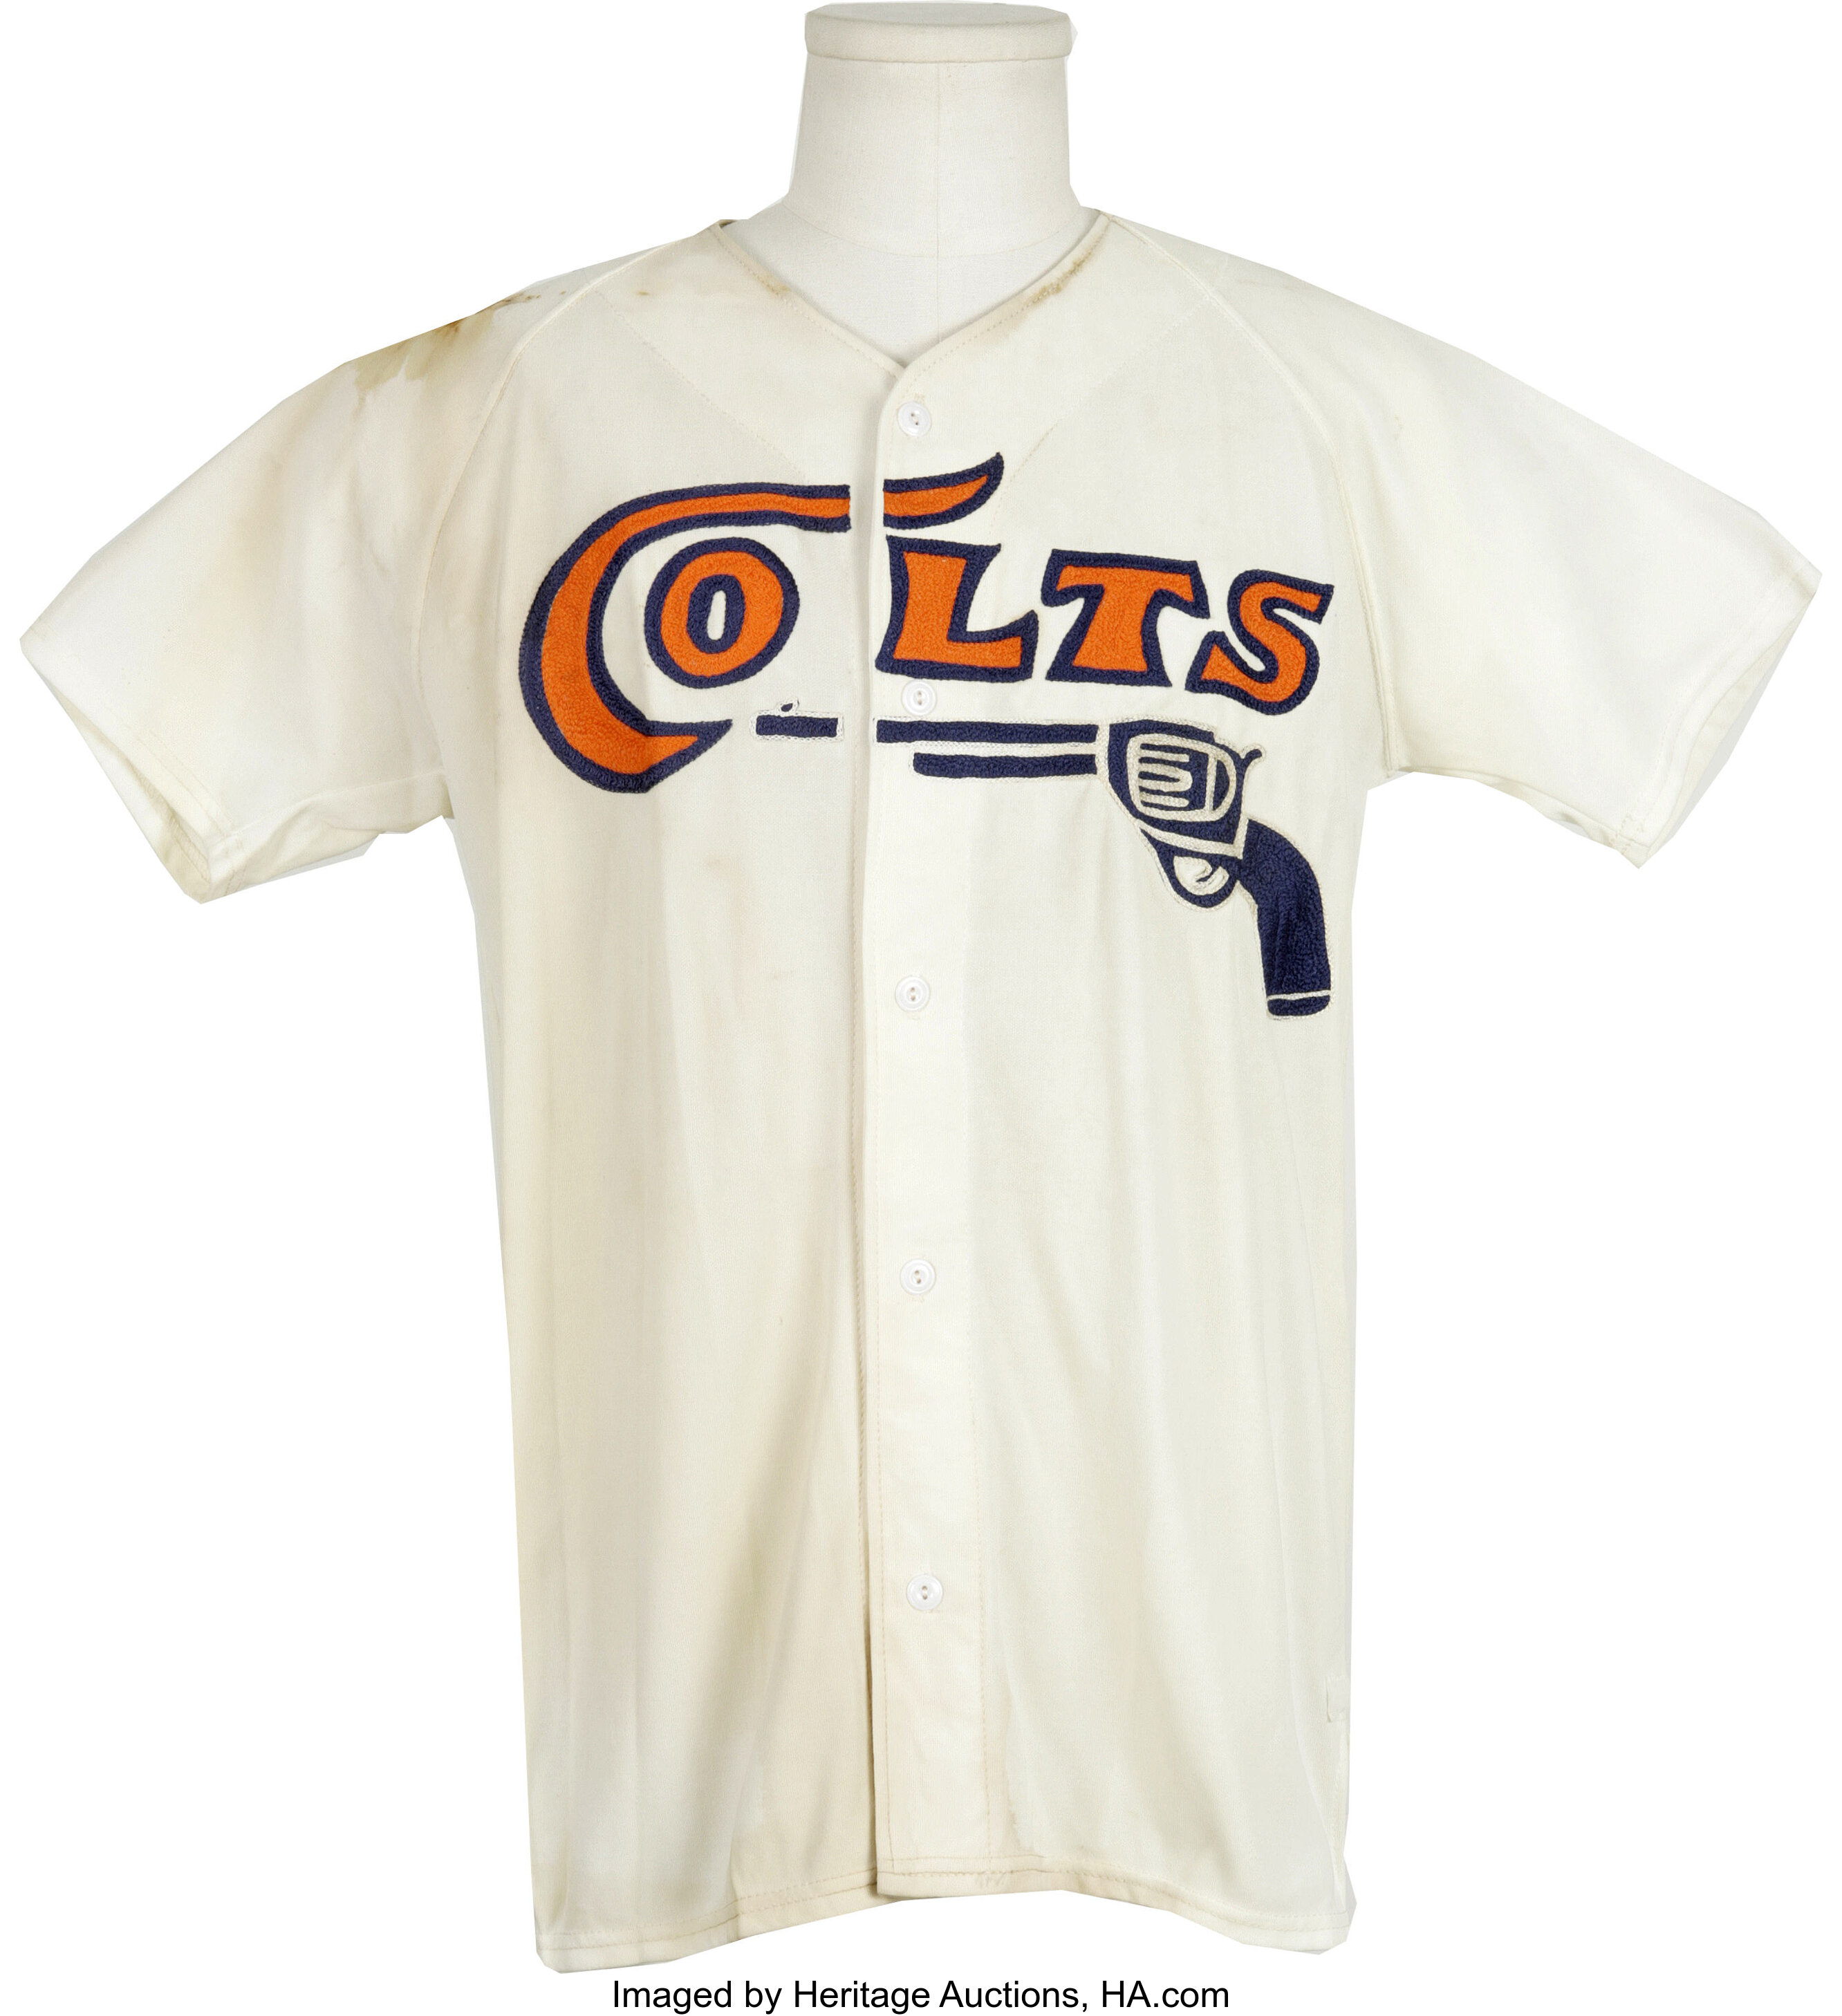 Vintage Starter Houston Colts Colt 45s Baseball Jersey Large